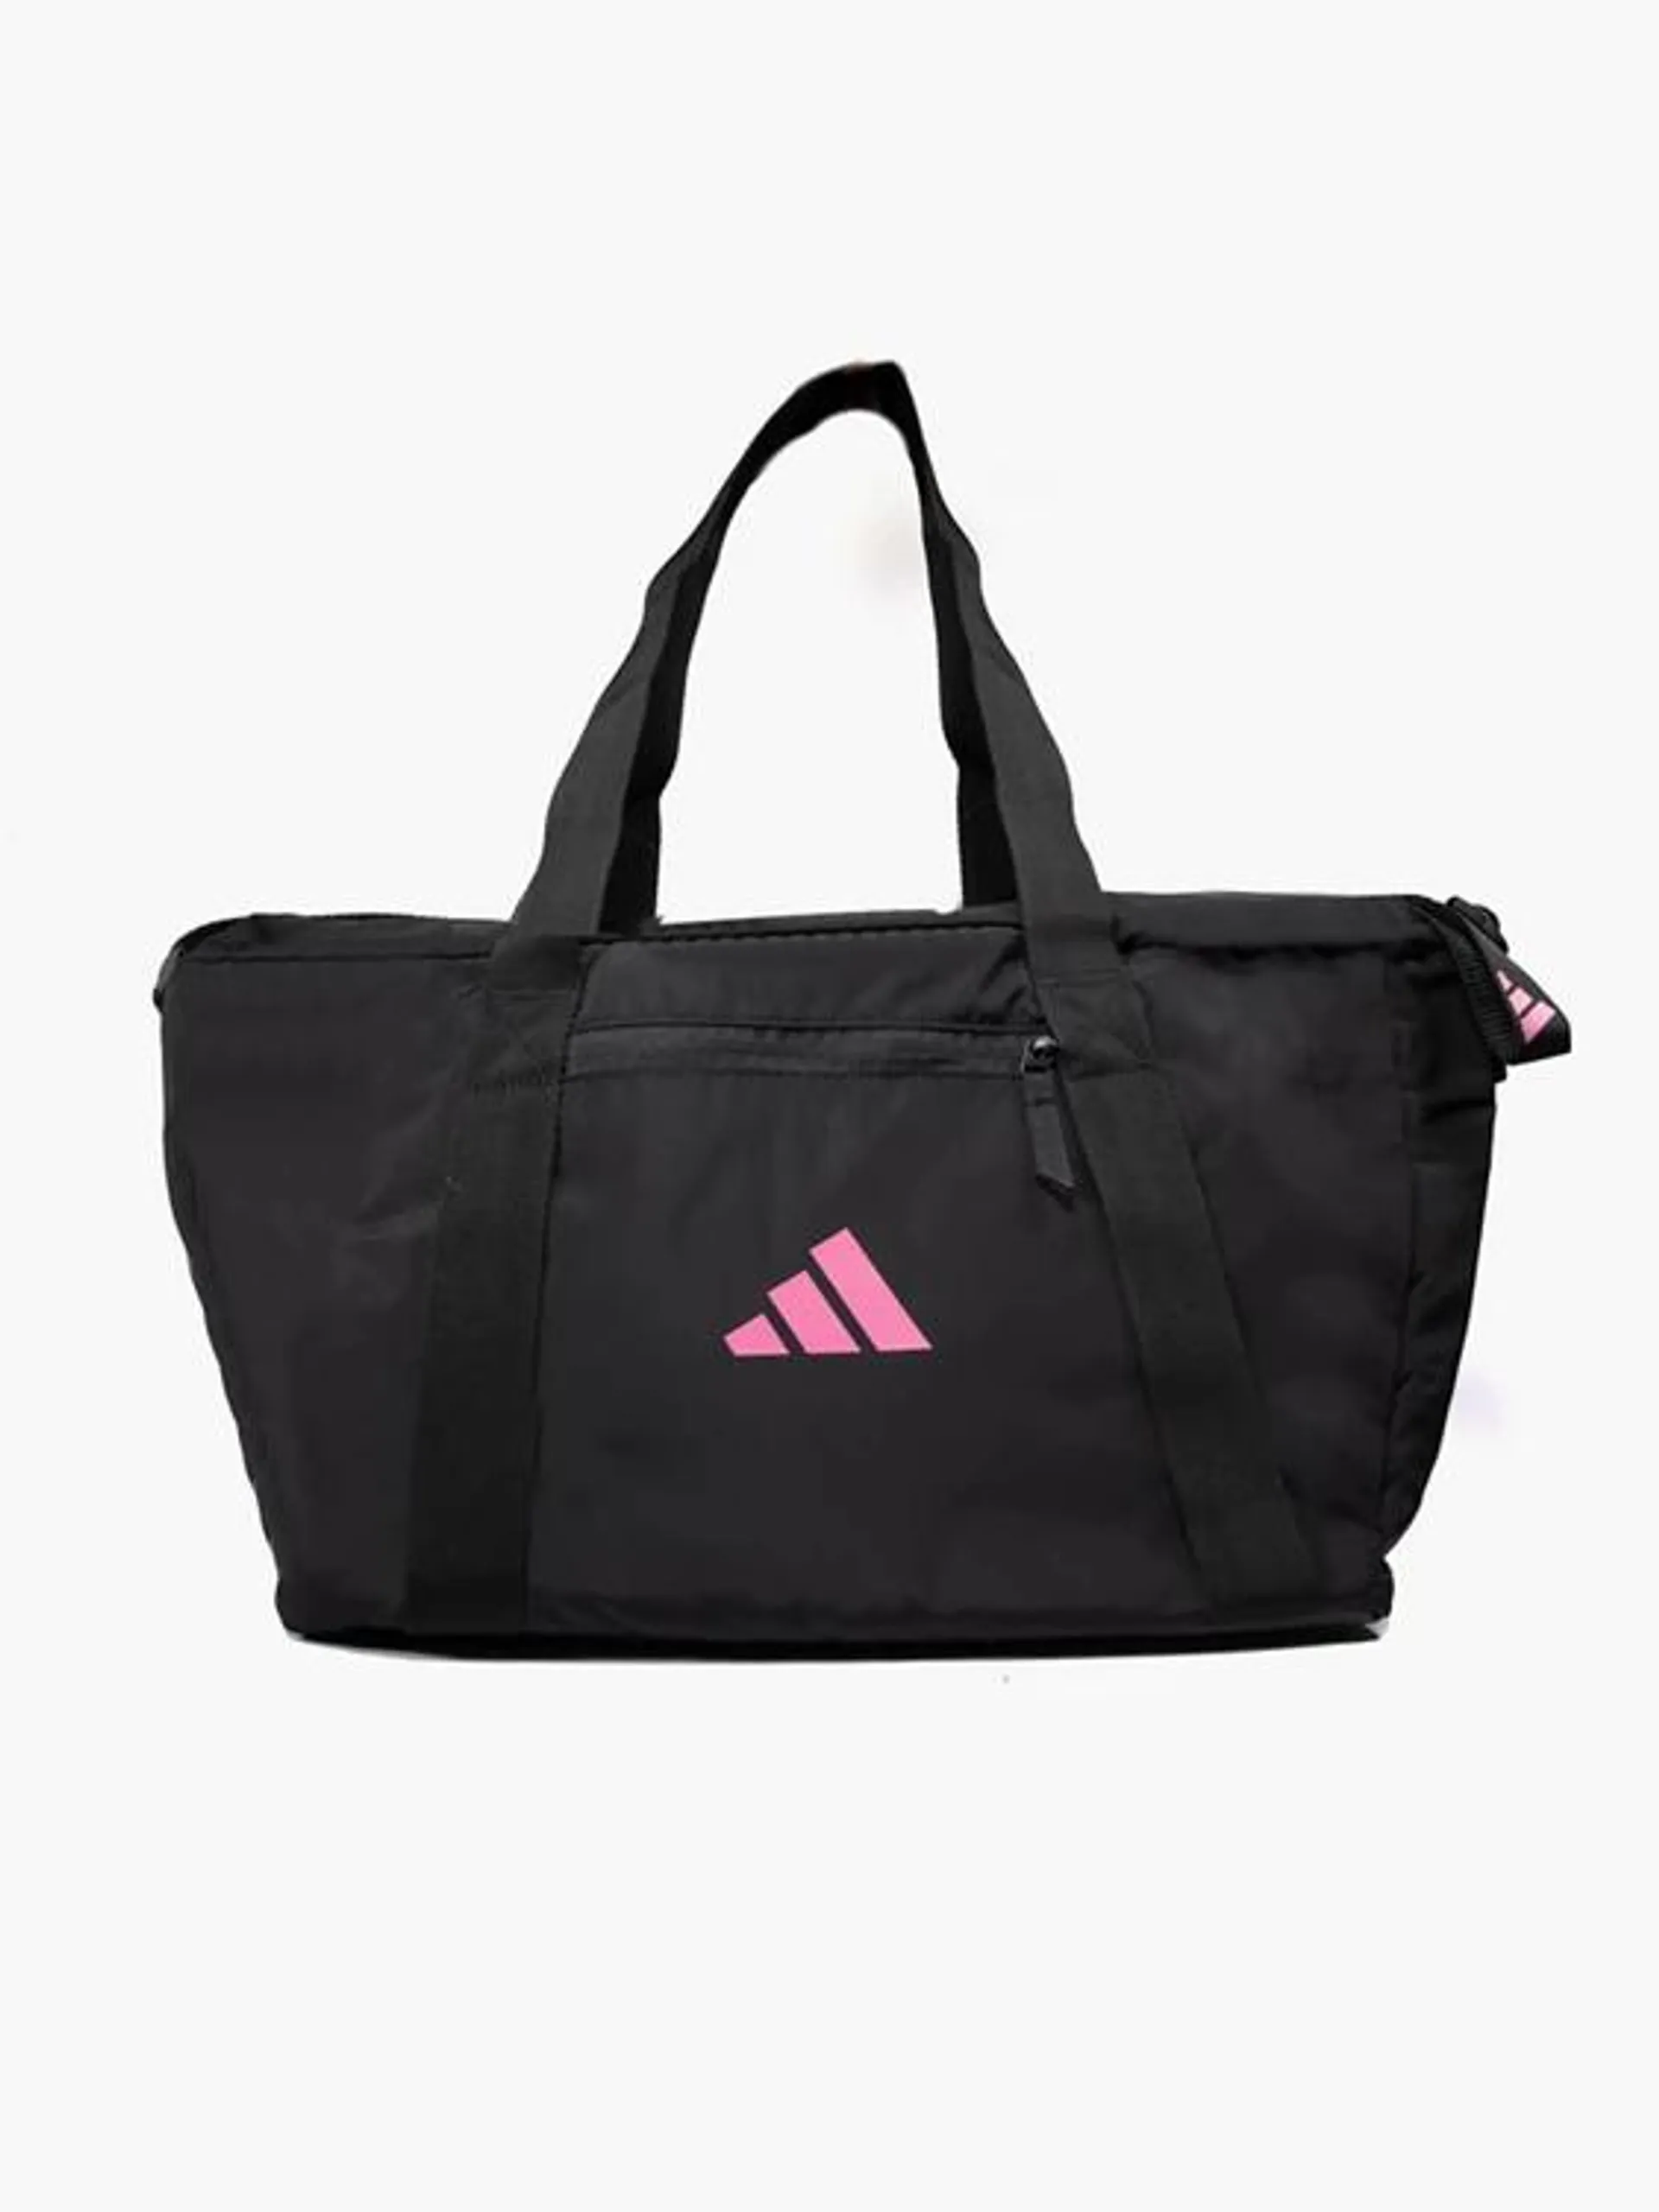 Adidas Black Shopper Bag